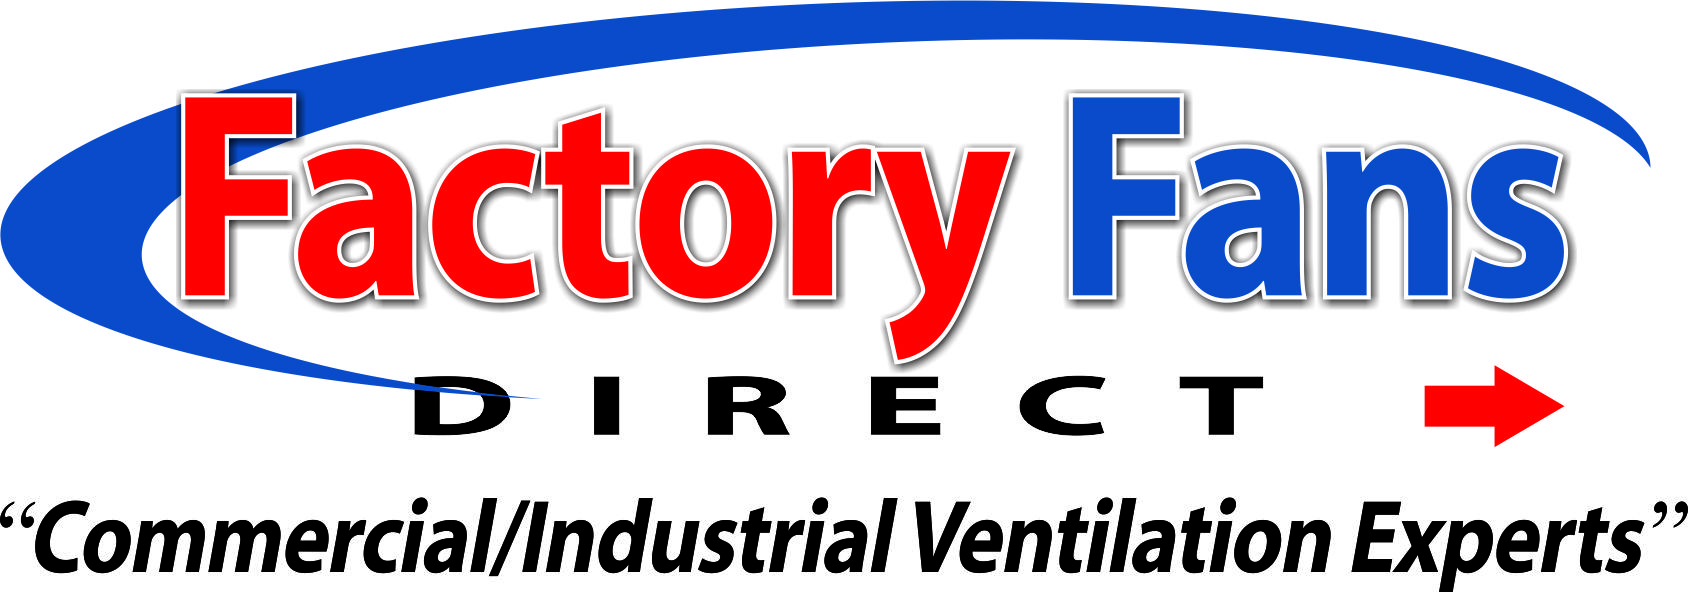 factory-fans-logo-commercial.jpg